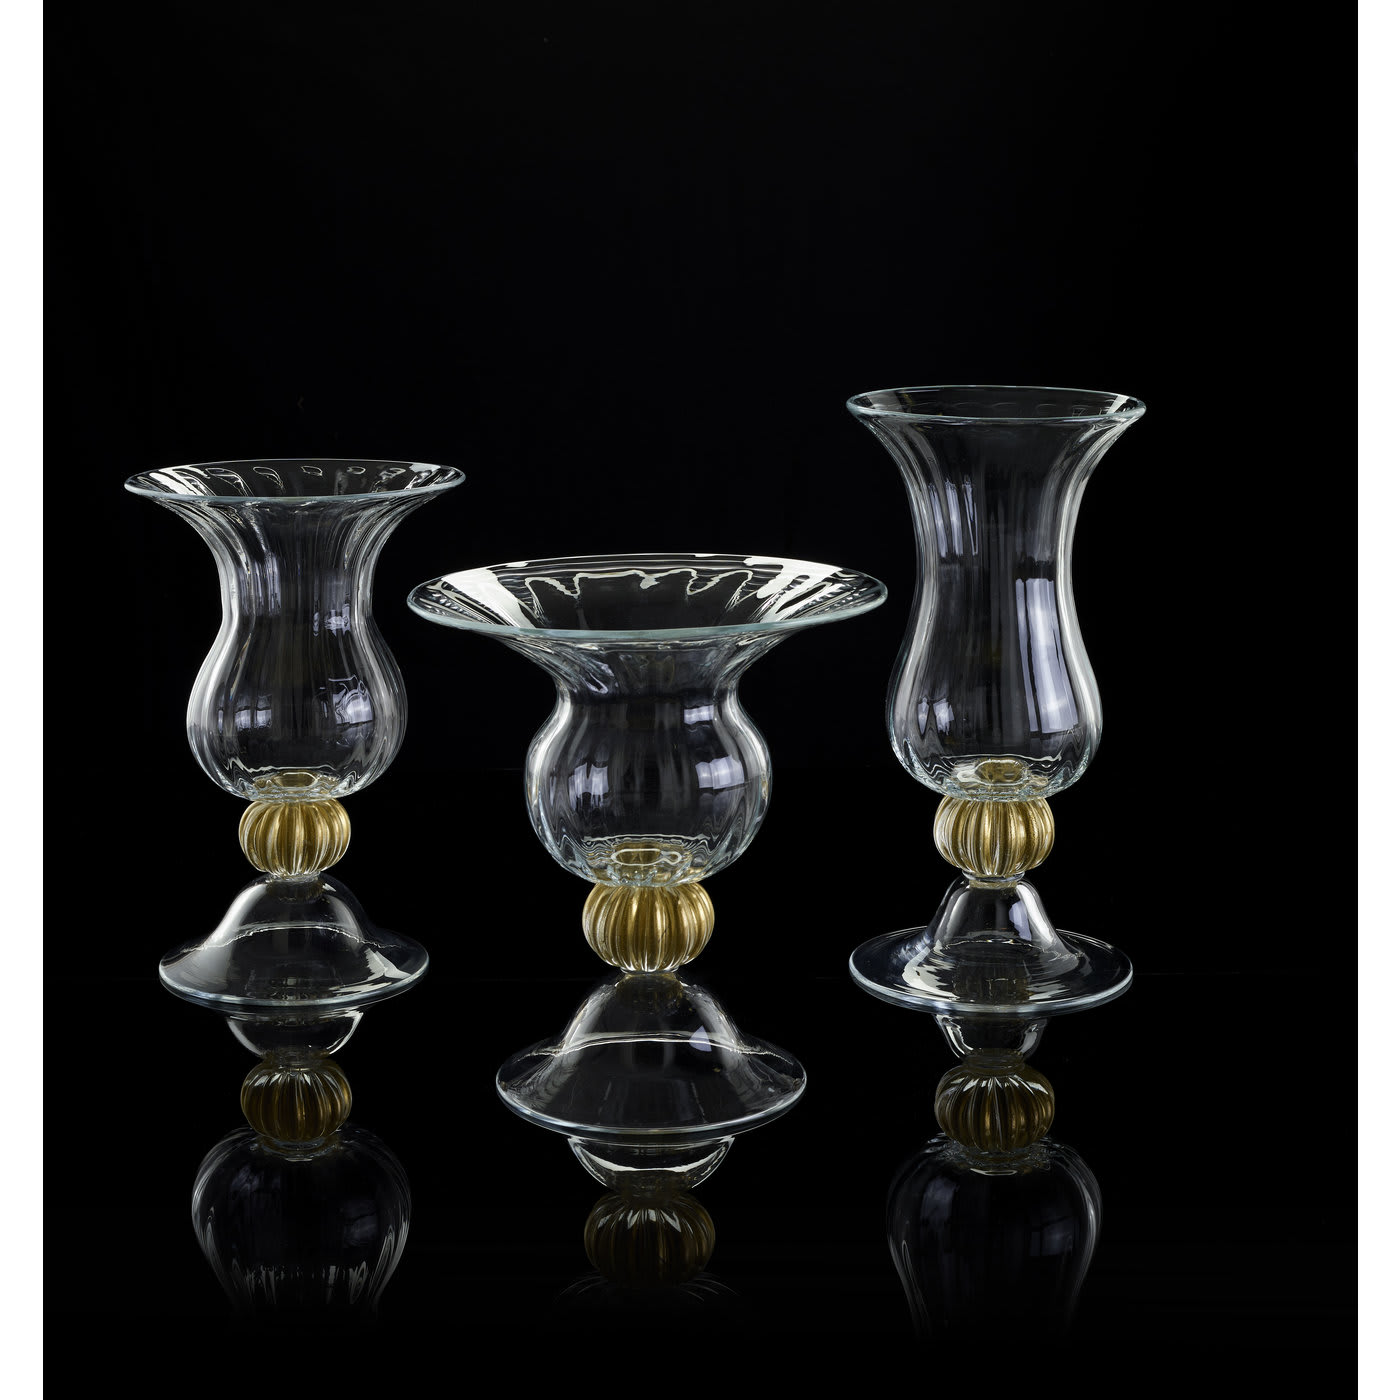 Berenice Small Vase Centerpiece - 24k Gold Leaf - Mara Dal Cin for DFN